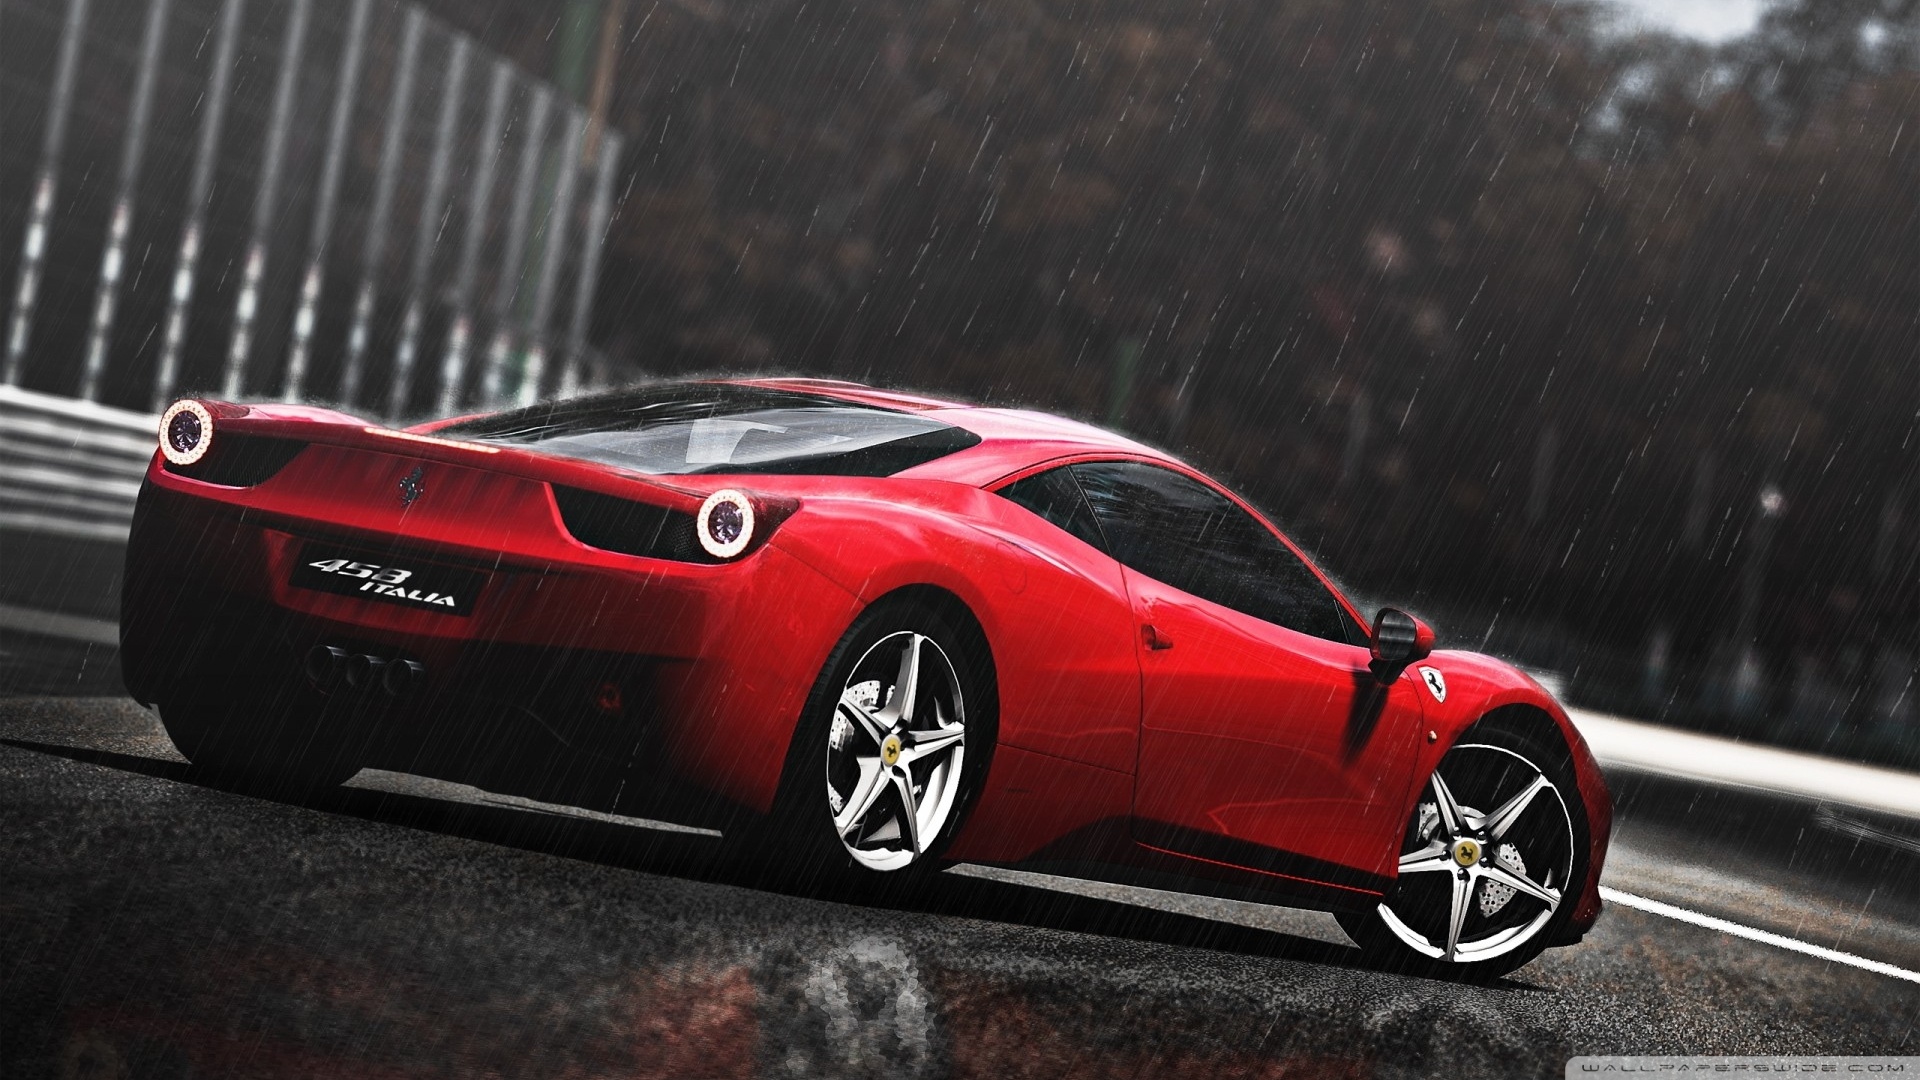 Ferrari 458 Italia Ultra Hd Desktop Background Wallpaper For 4k Uhd Tv Tablet Smartphone